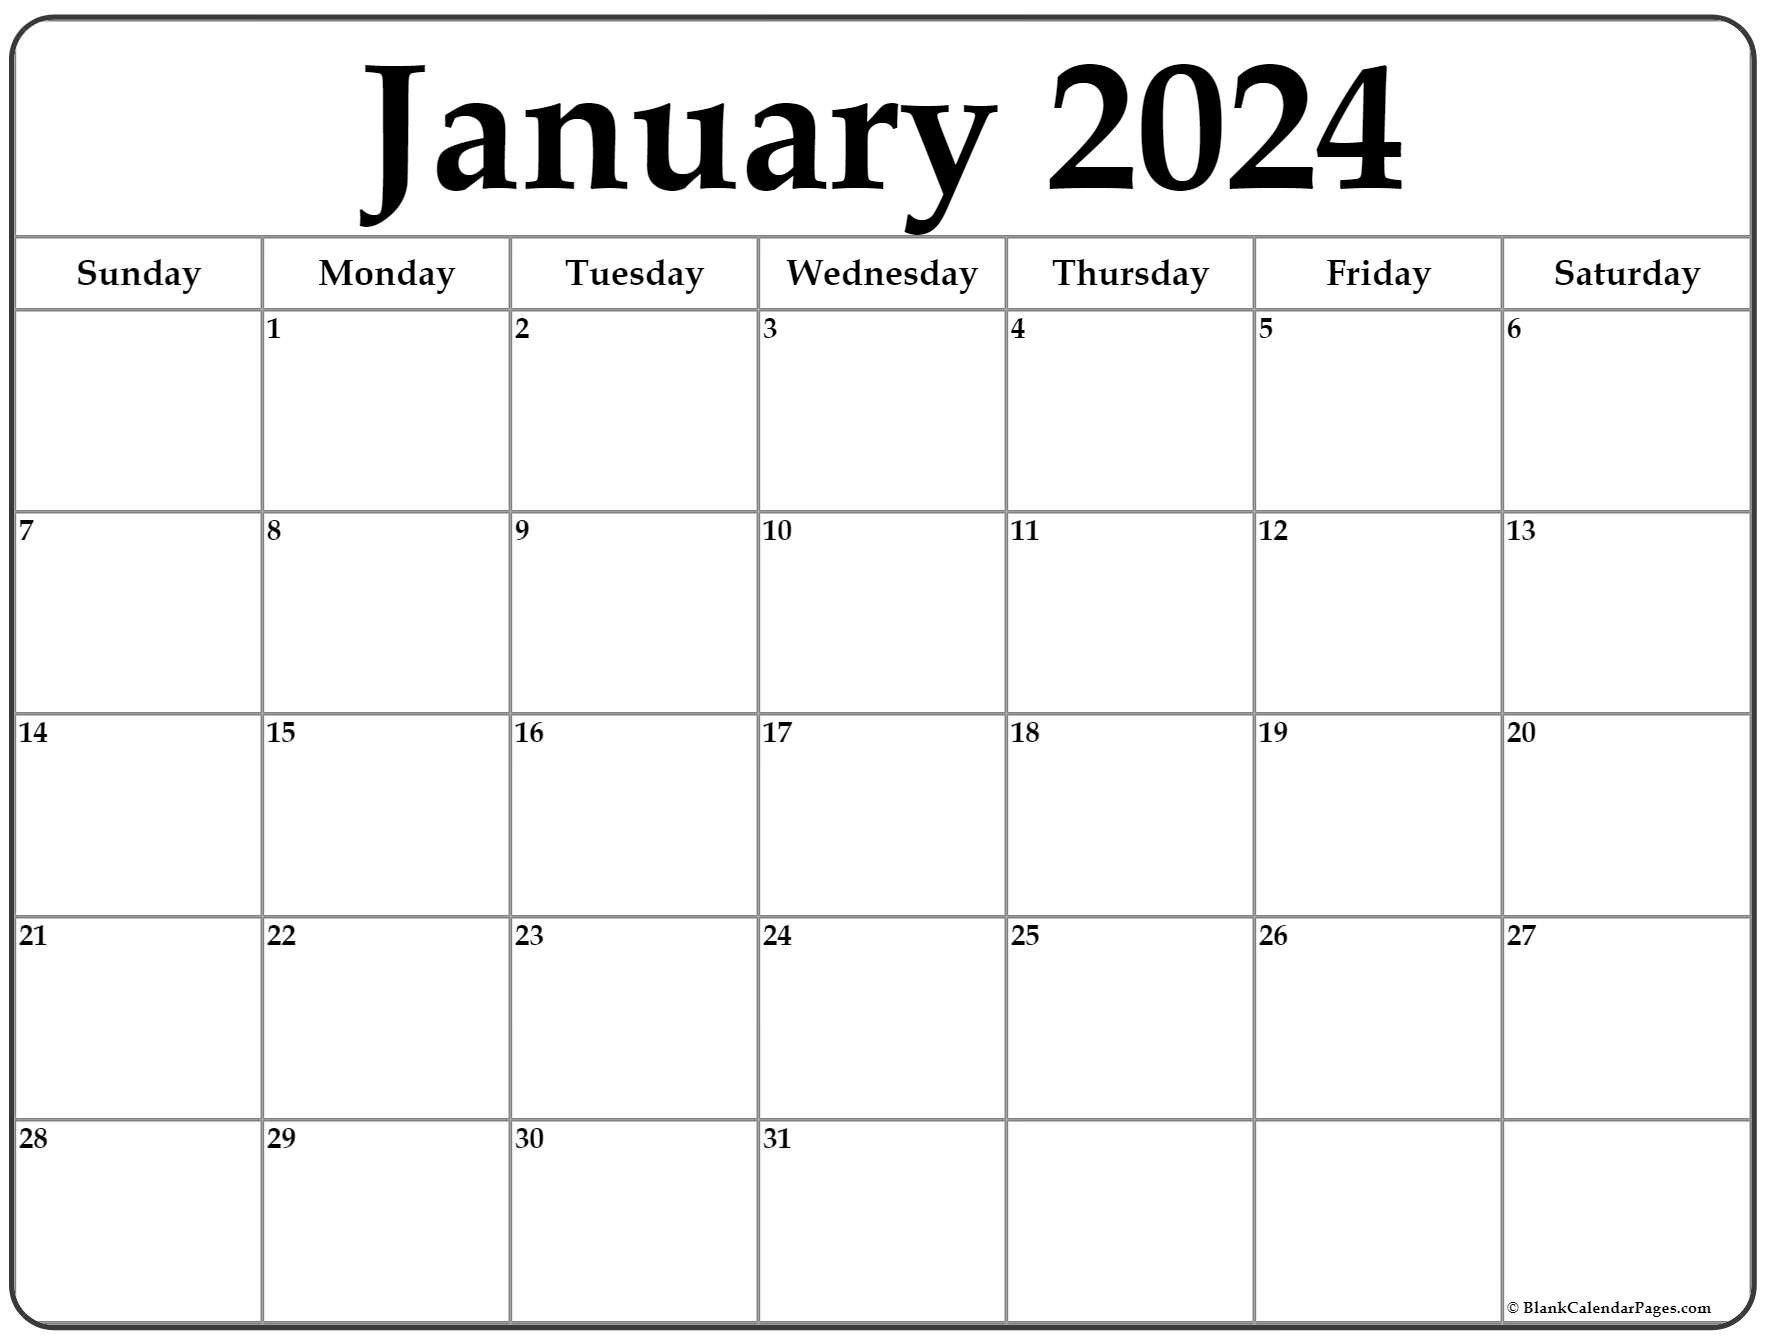 January 2024 Calendar | Free Printable Calendar with Free Printable Blank 2024 Calendar